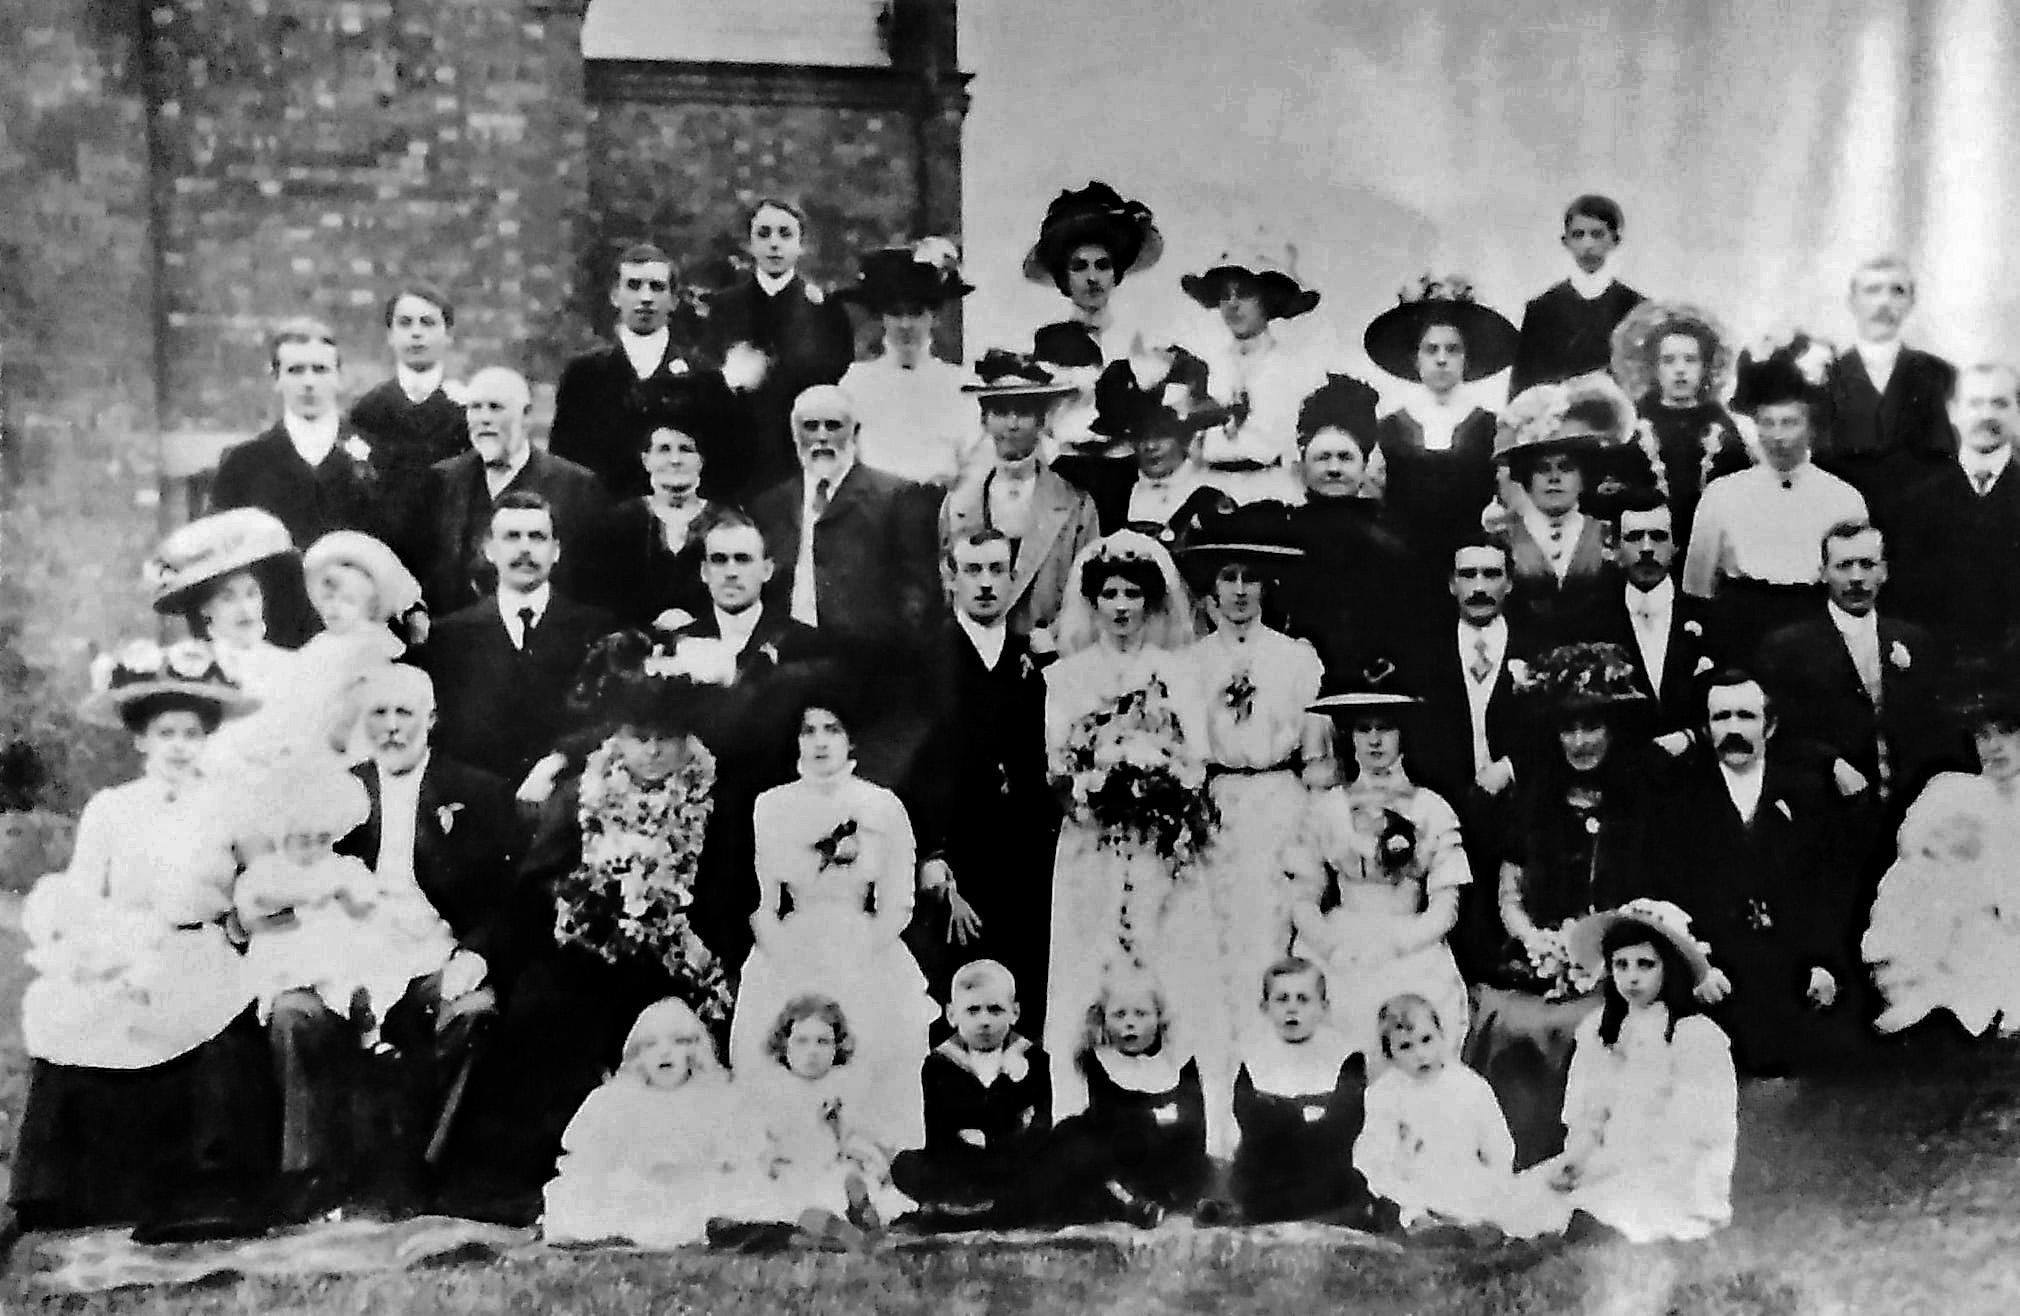 Warren wedding 1910